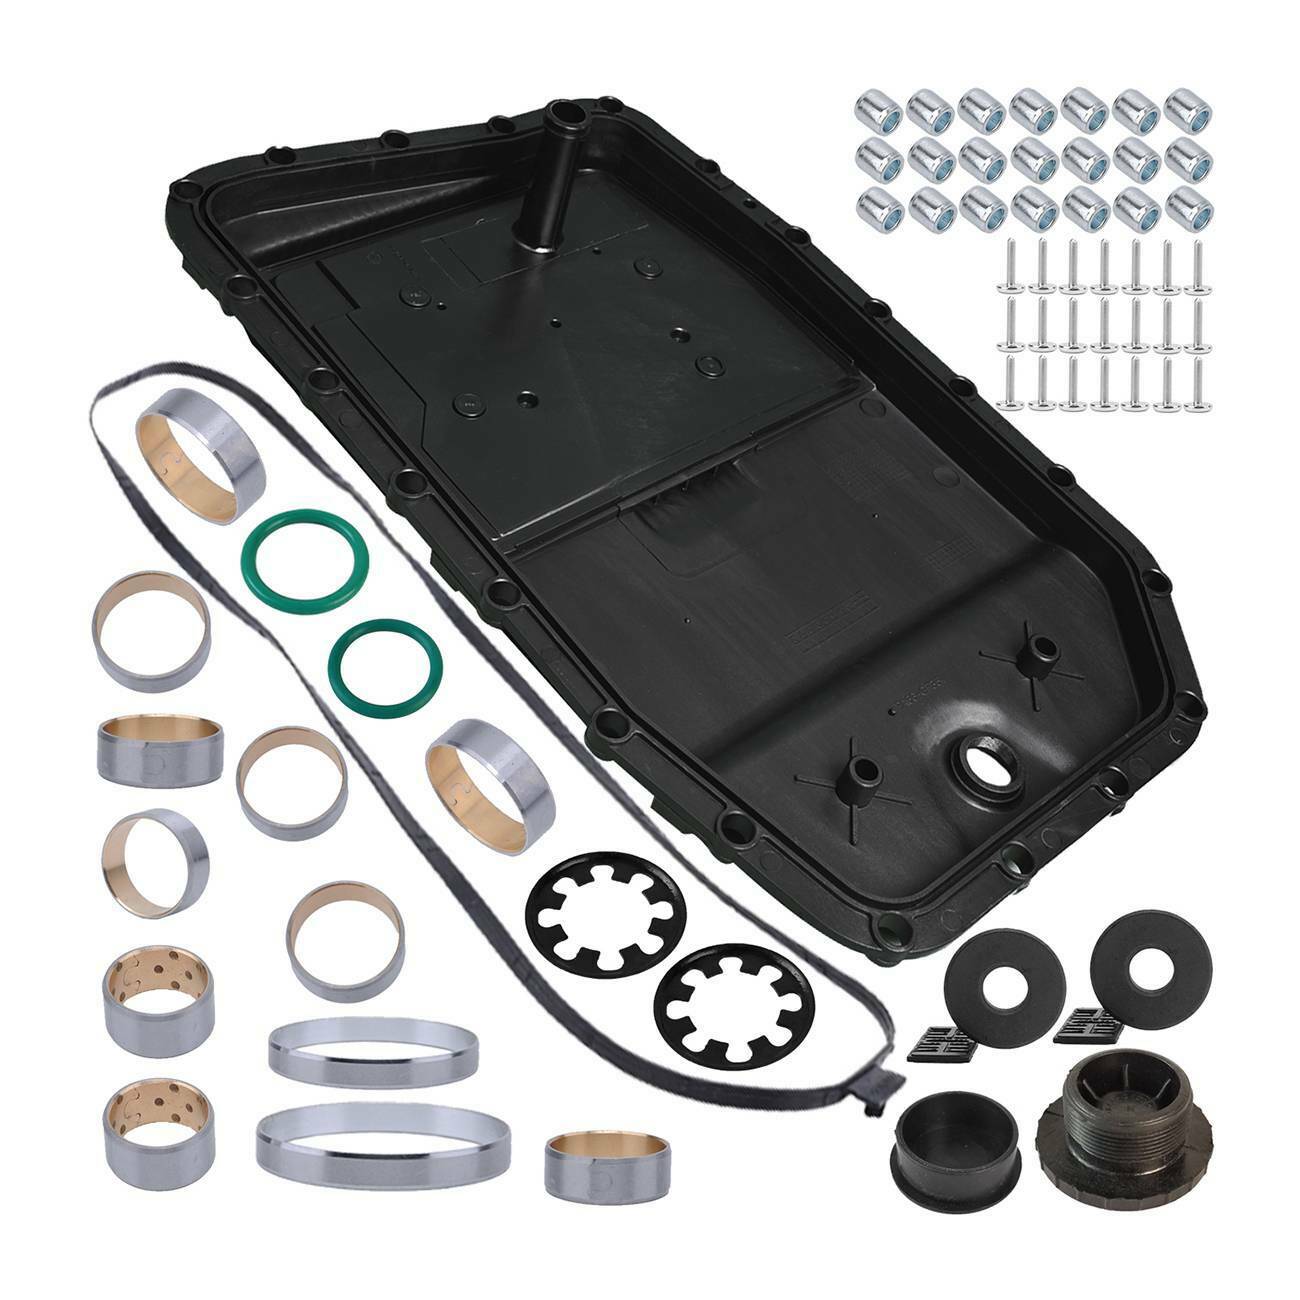 Auto Trans Oil Pan Filter + Repair Kit + Sleeve for BMW E60 E70 E83 E90 German Made